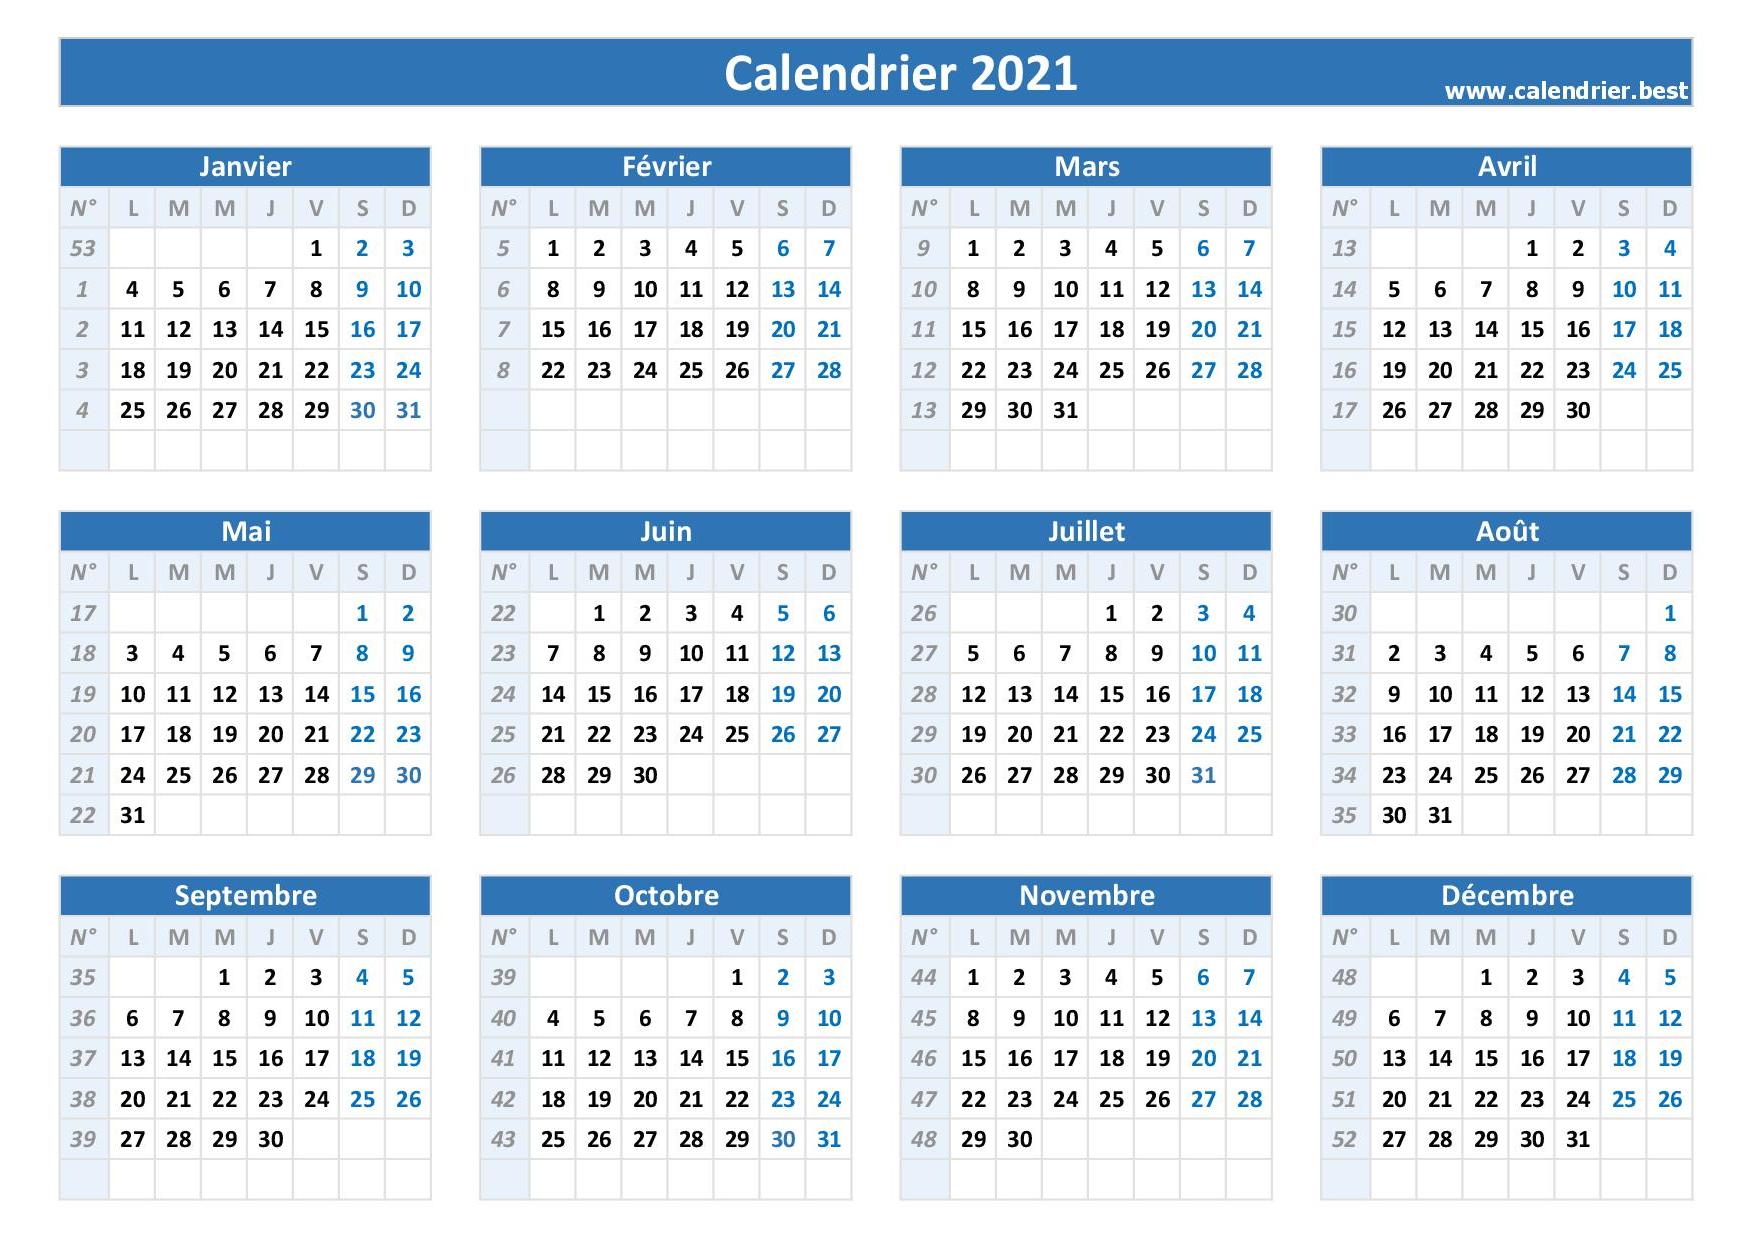 calendrier-2021-semaine-40-calendrier-lunaire